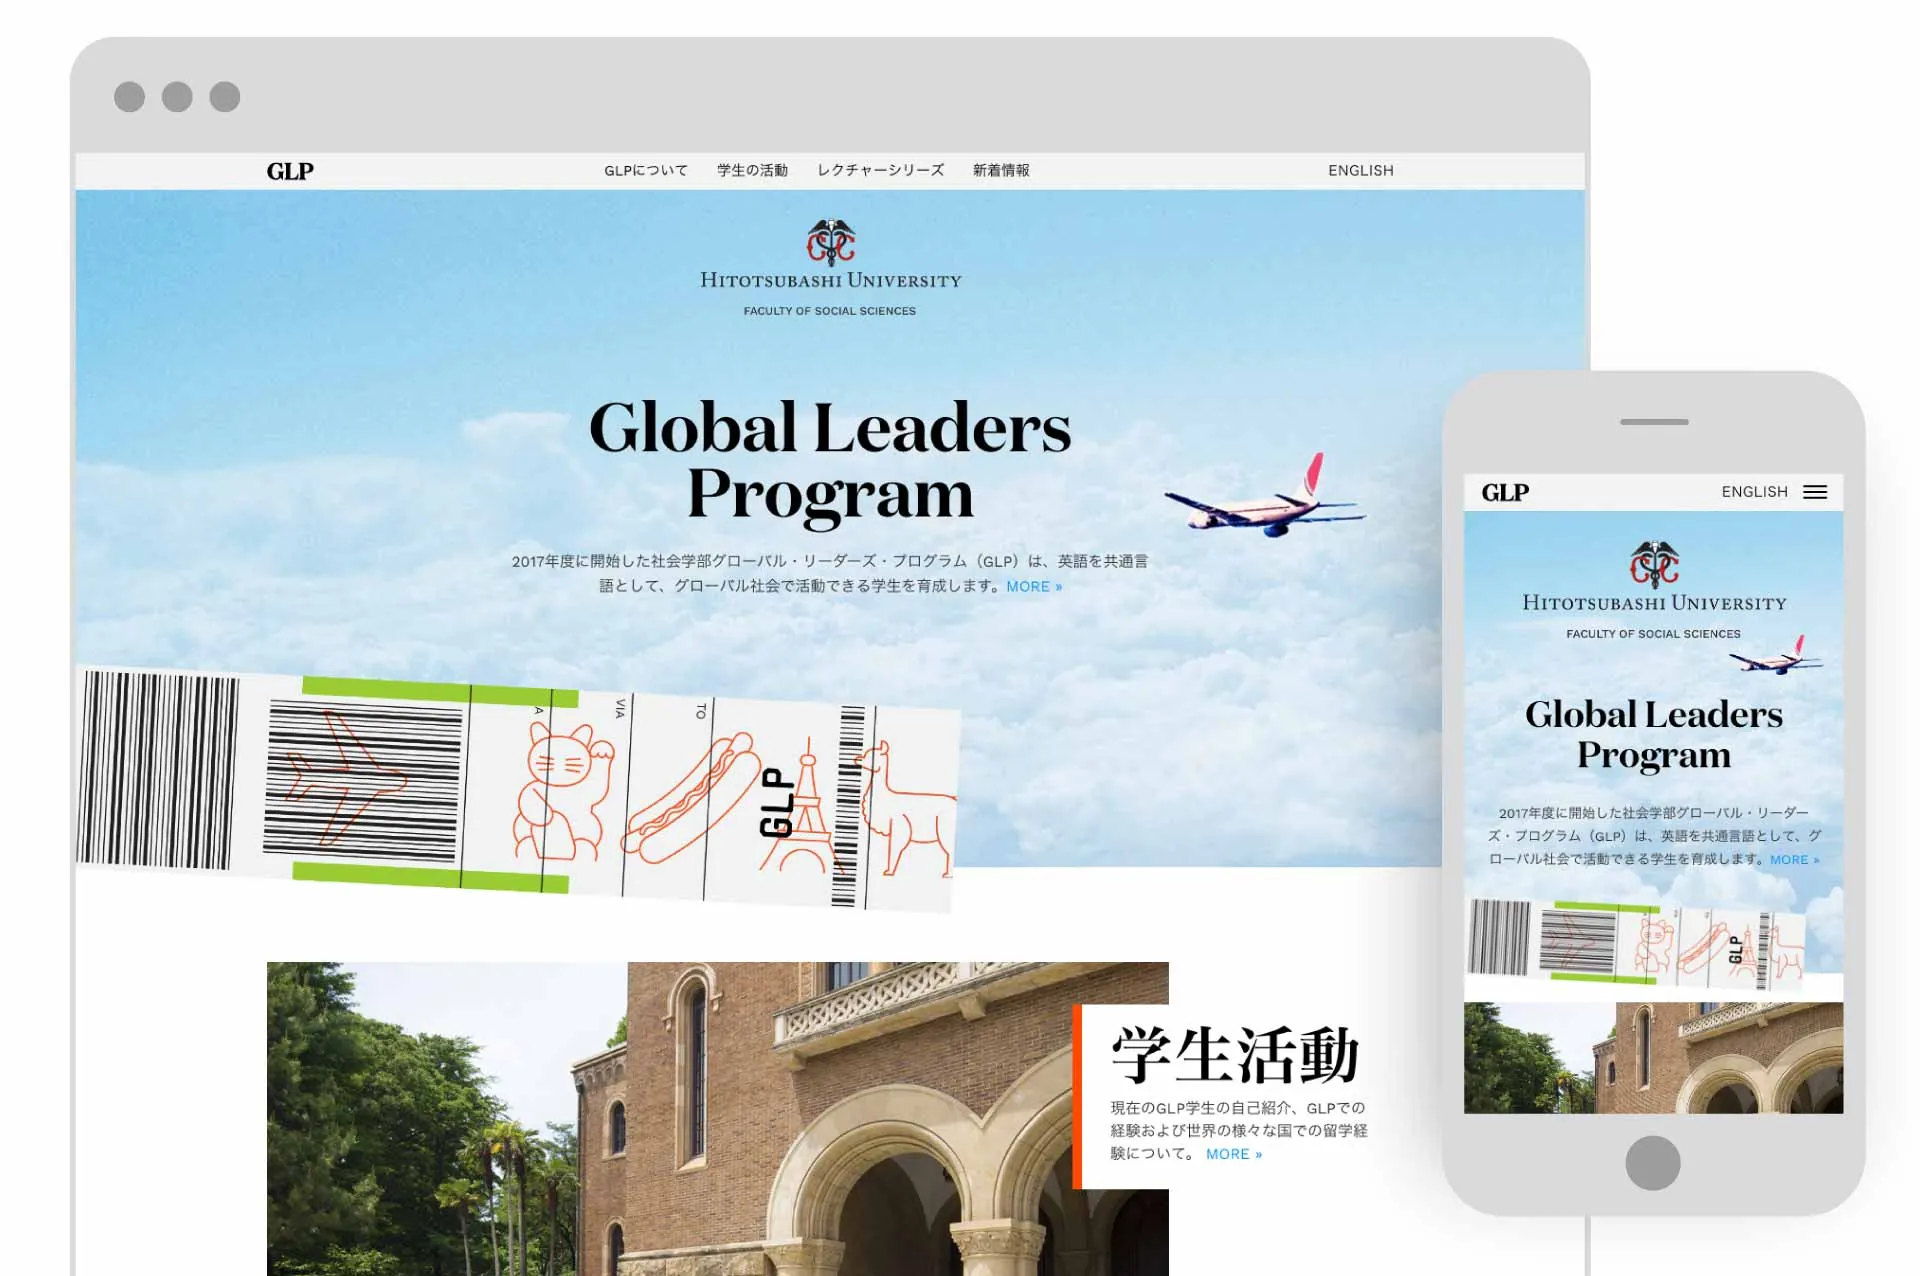 Hitotsubashi University - Global Leaders Program - Japanese Homepage Template